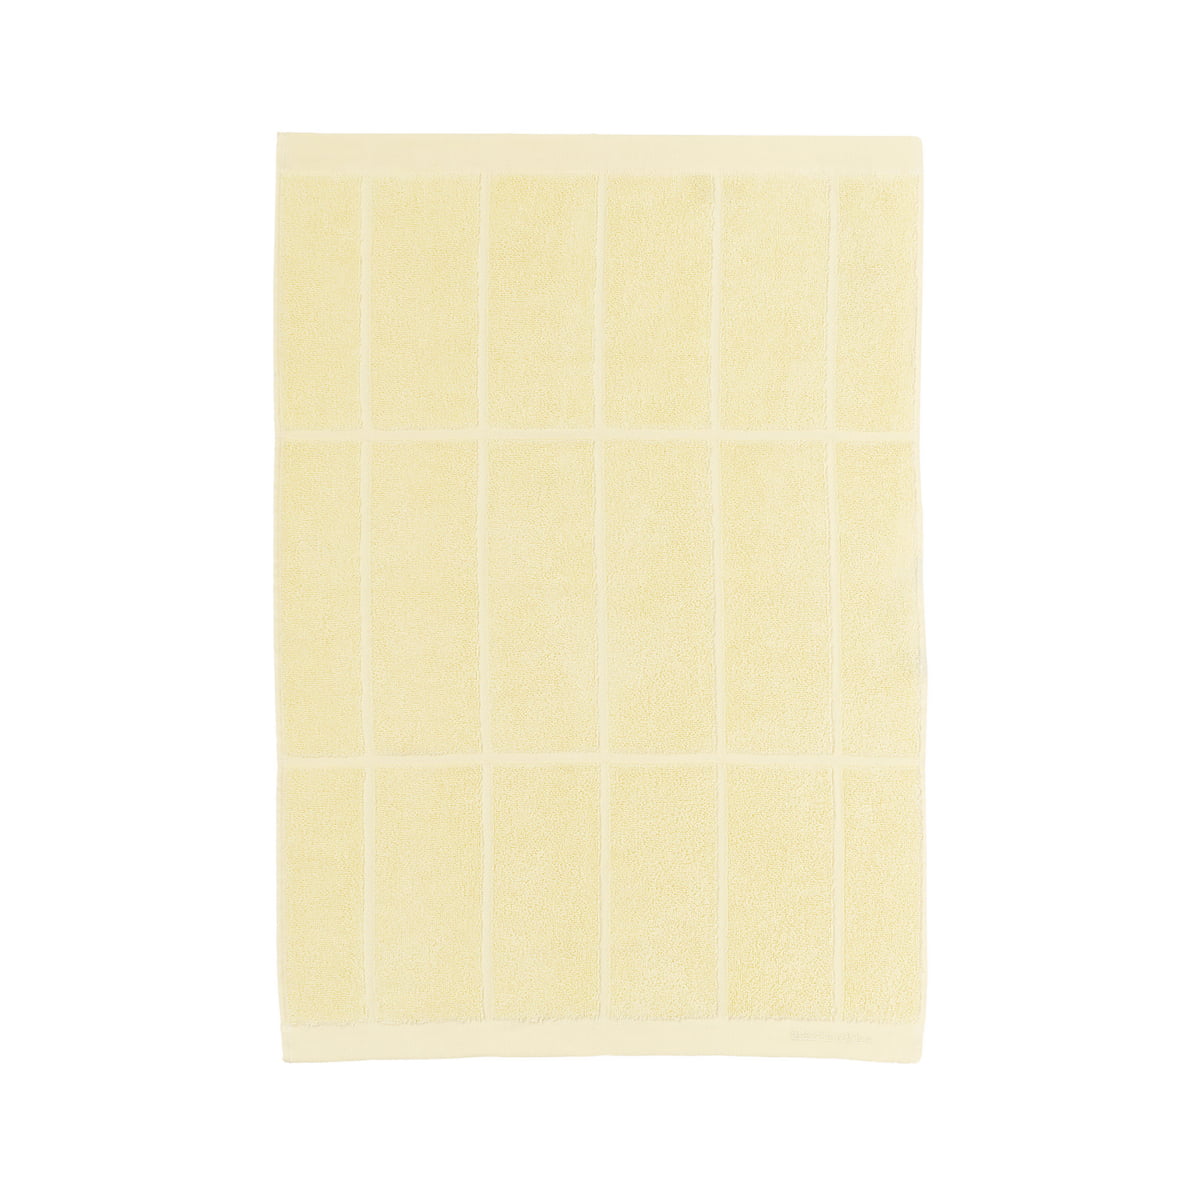 marimekko - tiiliskivi serviette de bain, 50 x 70 cm, butter yellow